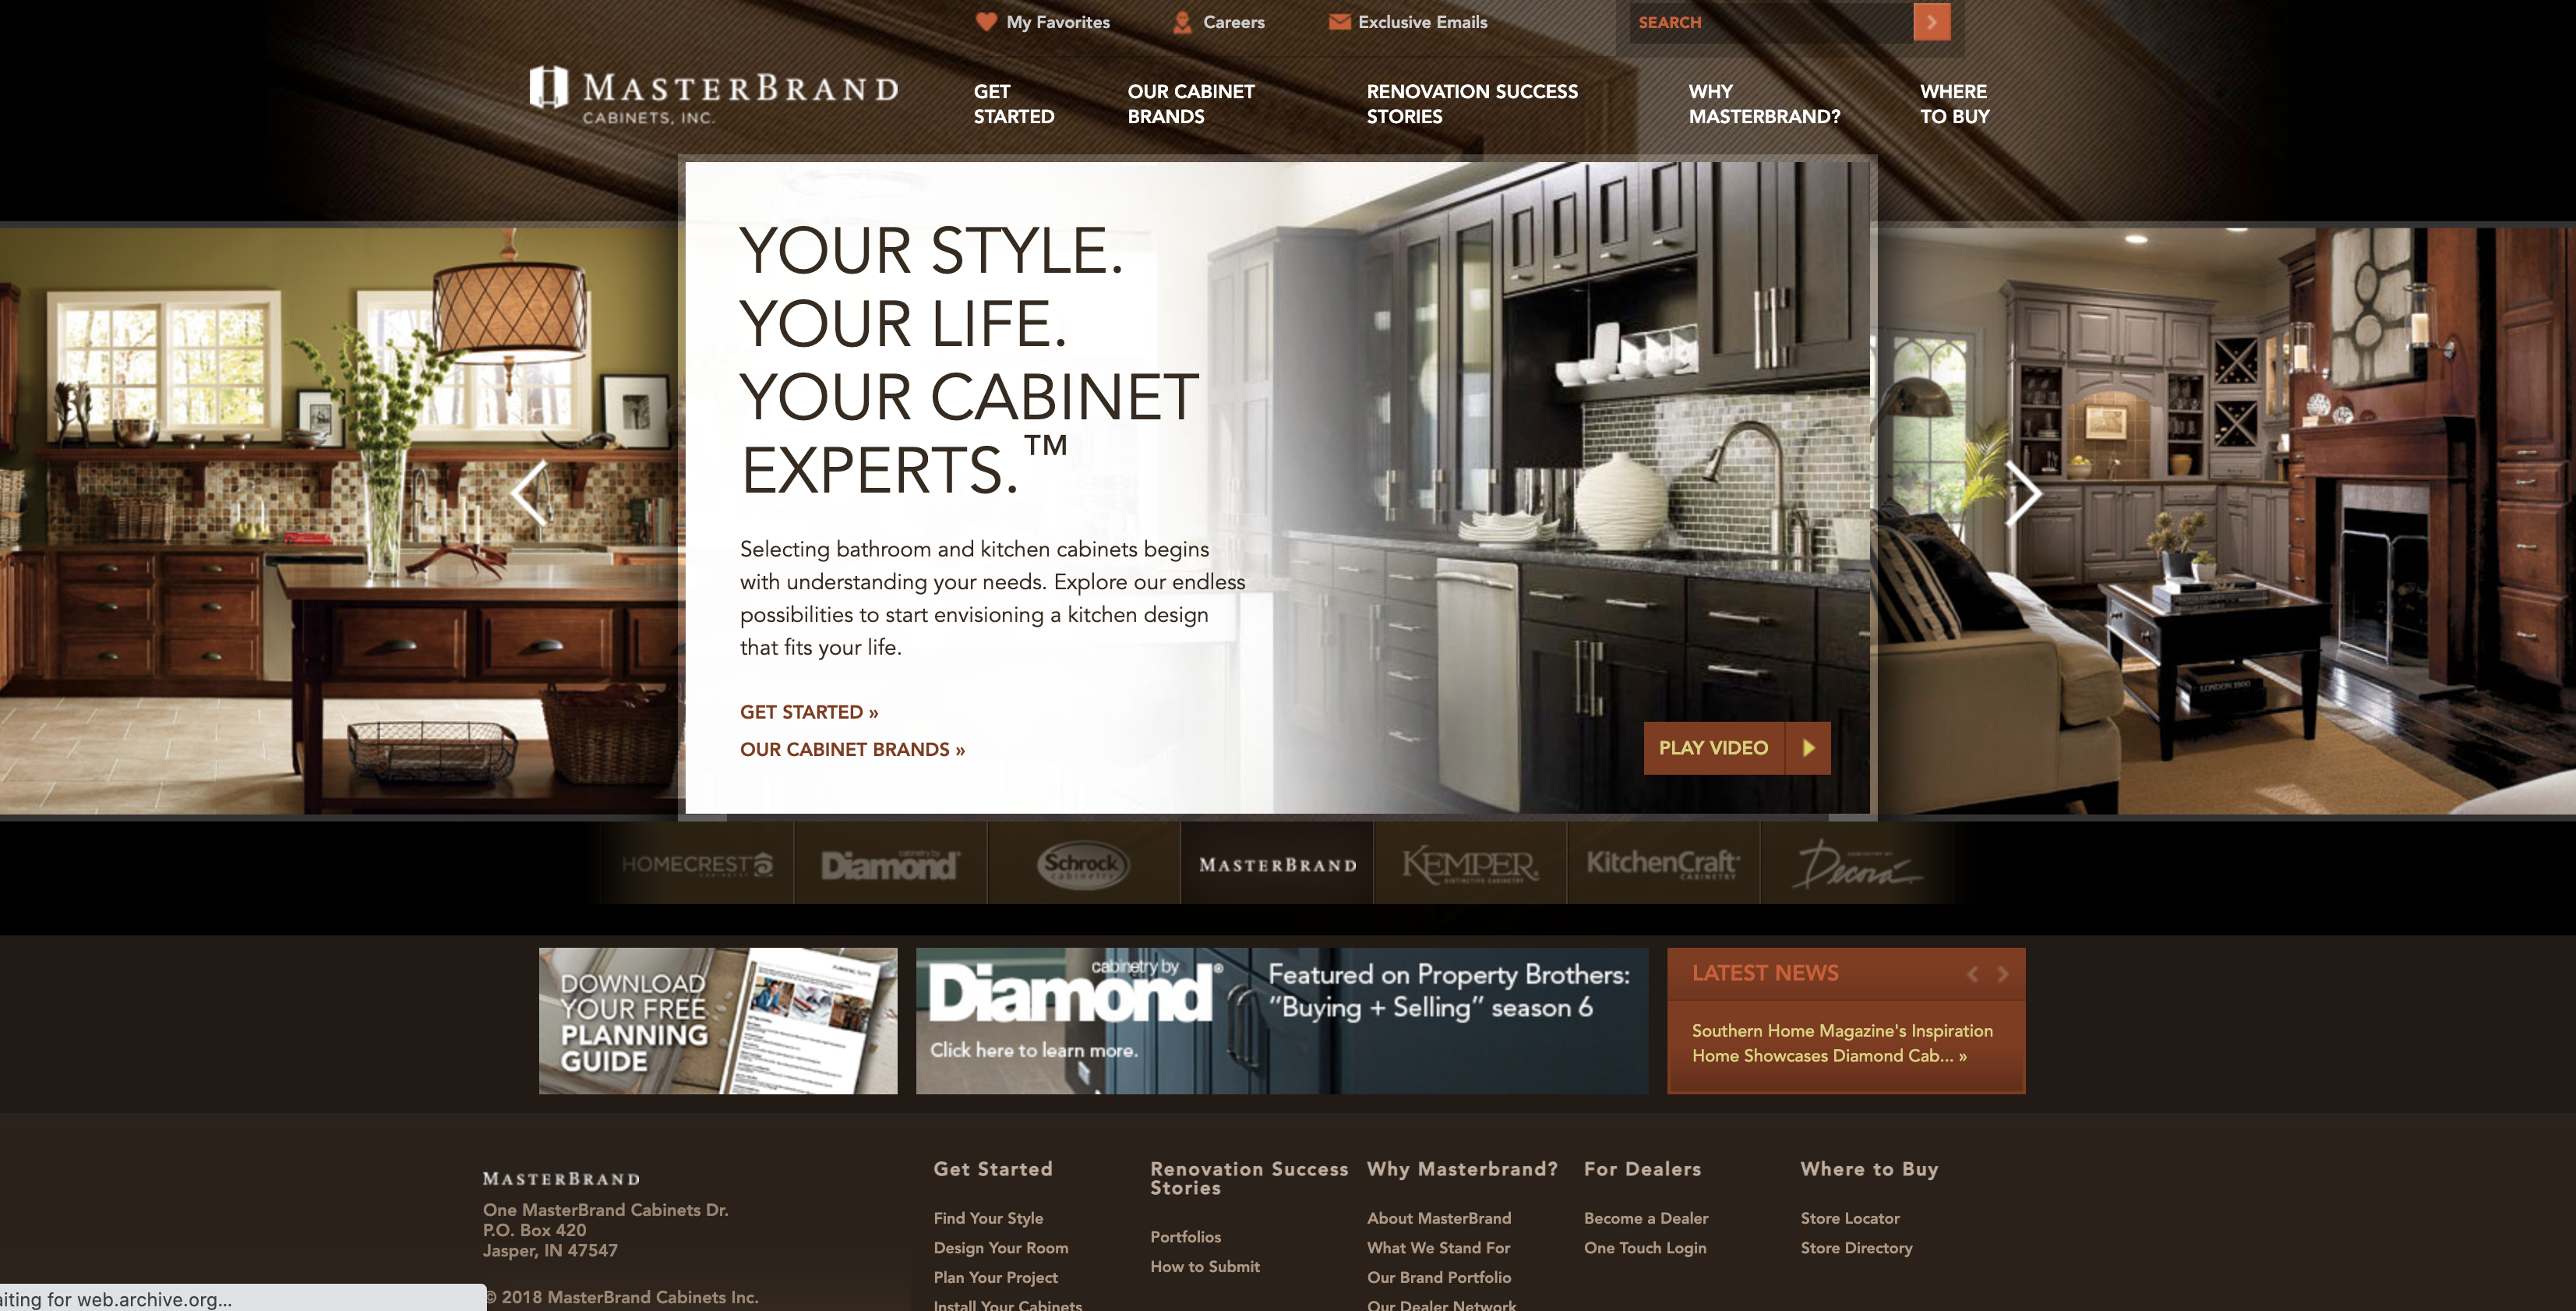 Masterbrand's website on desktop.